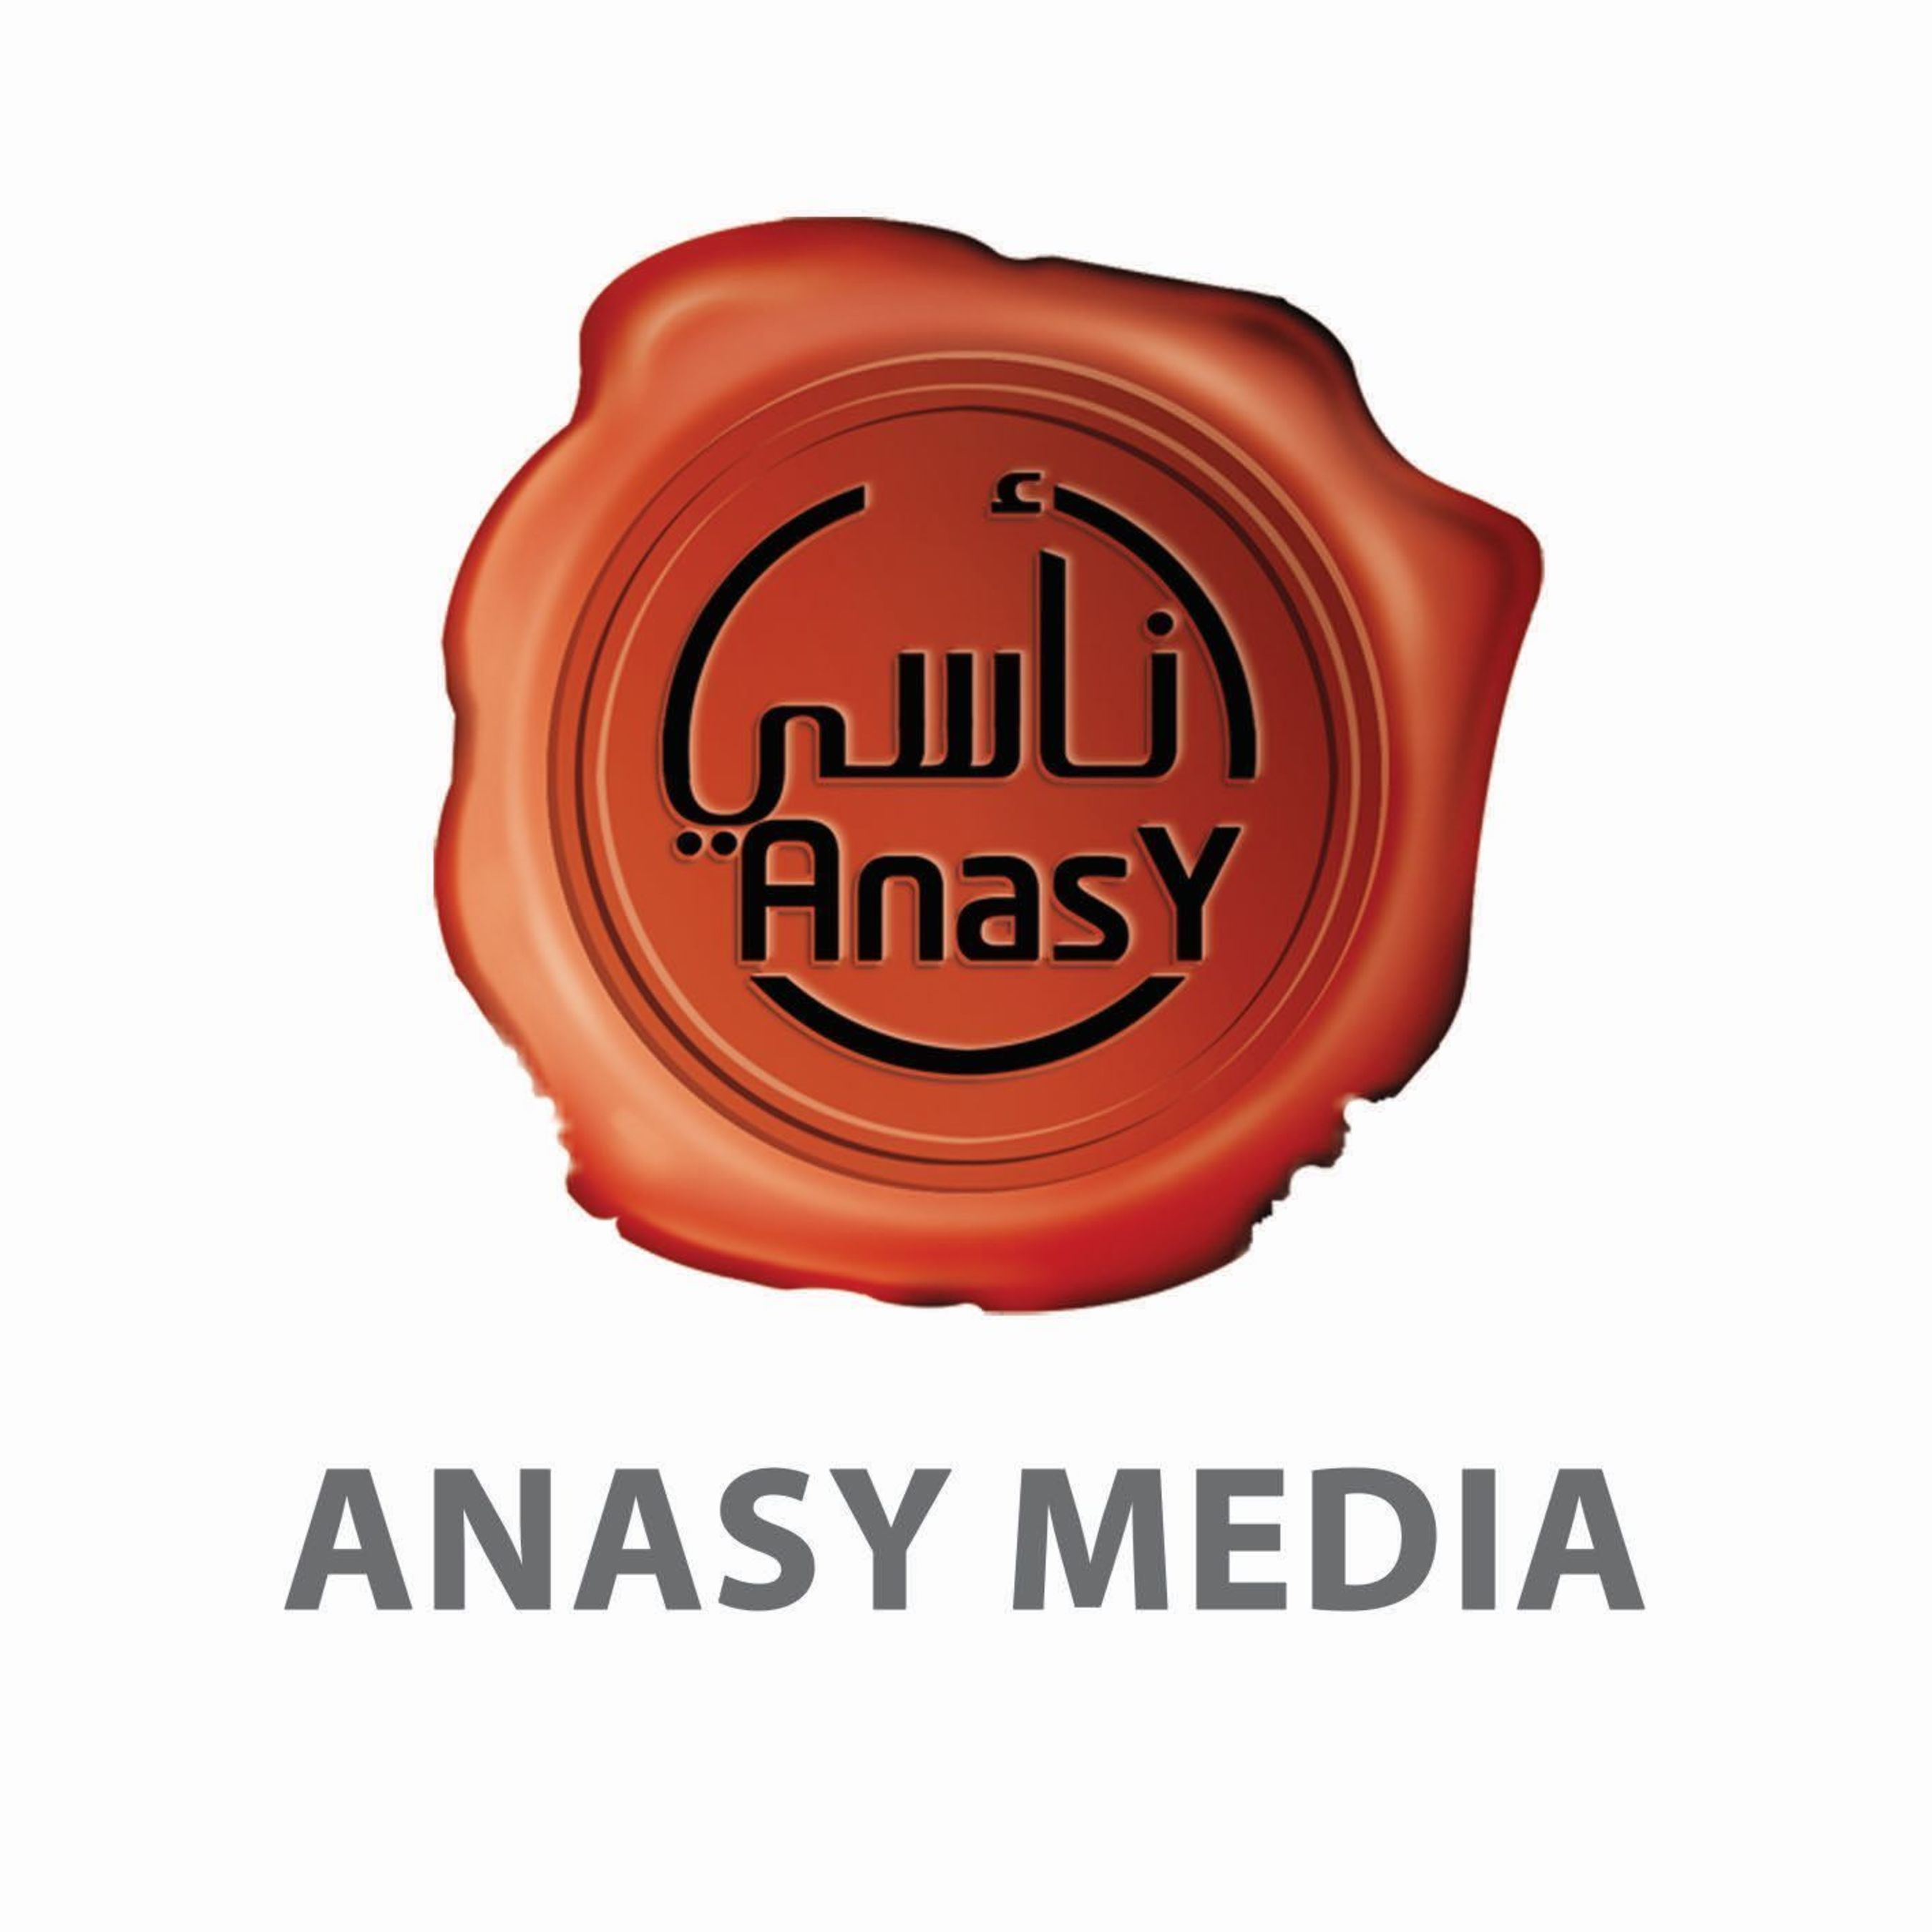 Anasy Media Logo (PRNewsFoto/Anasy Media)